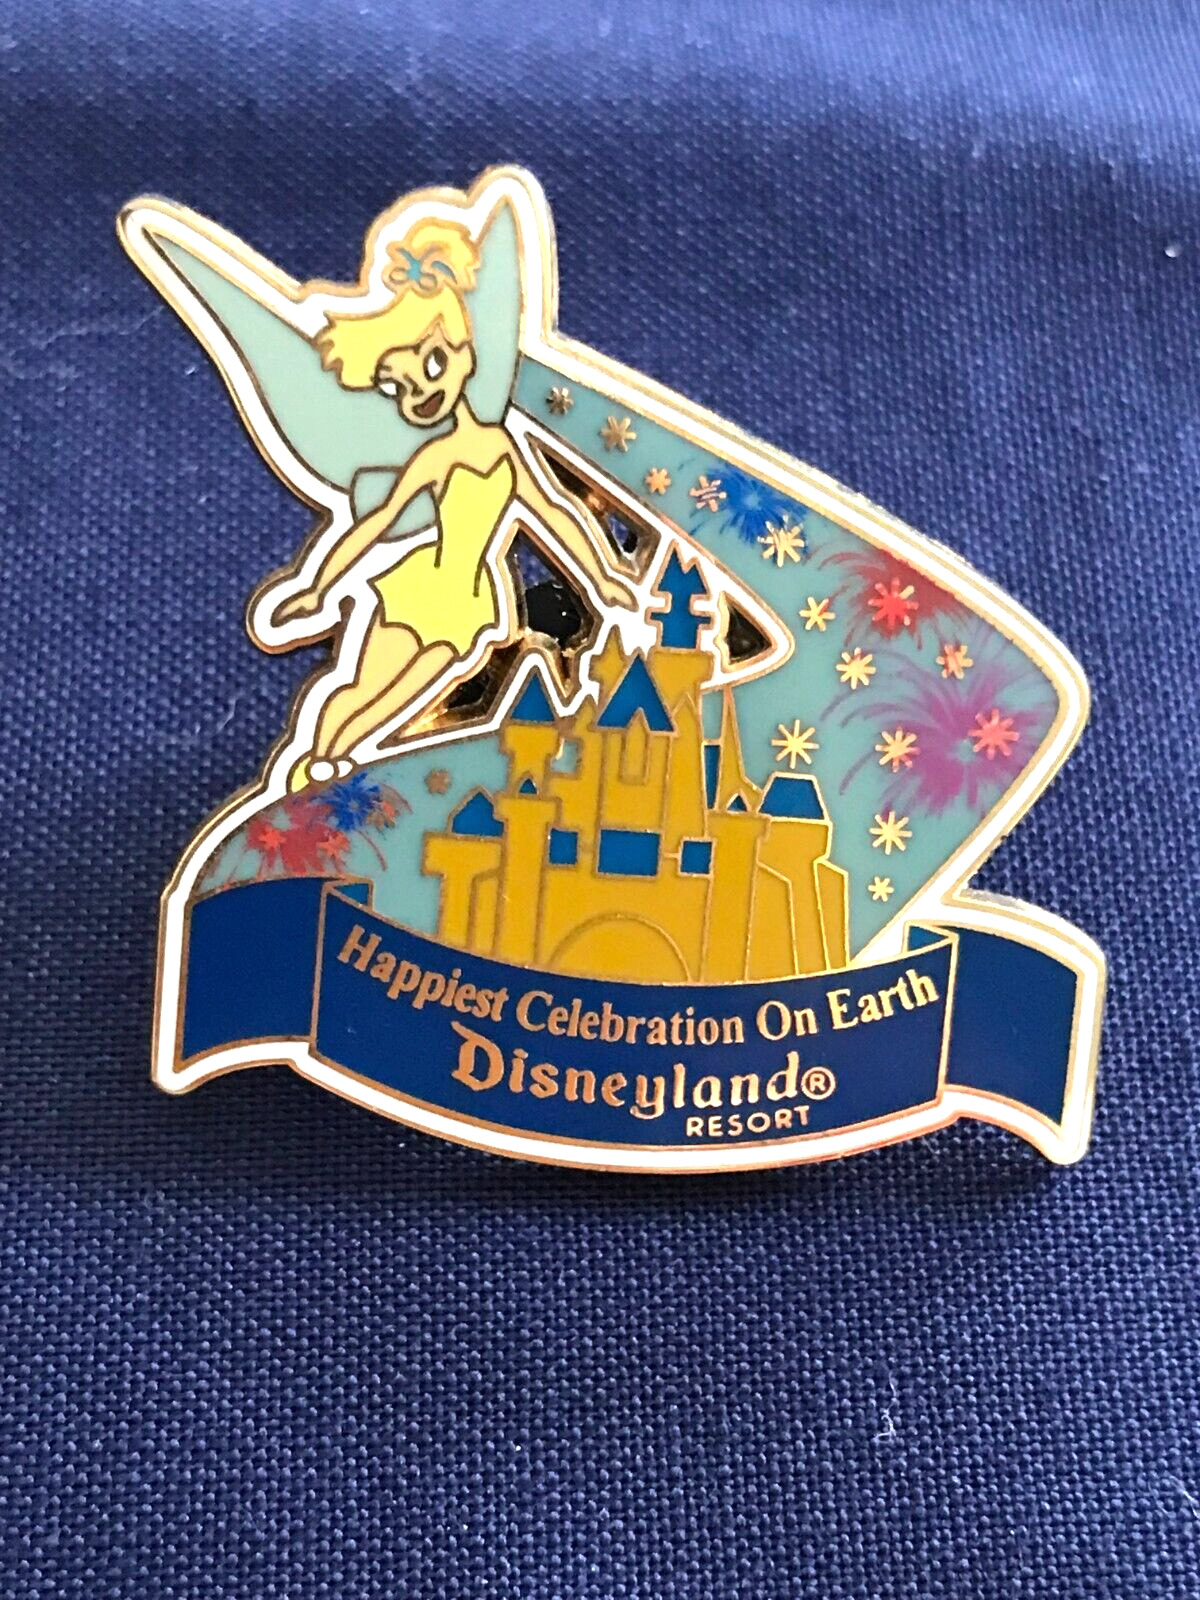 Rare Vintage Disneyland Tinkerbell Enamel Pin Hard to Find Promotional Item 2005